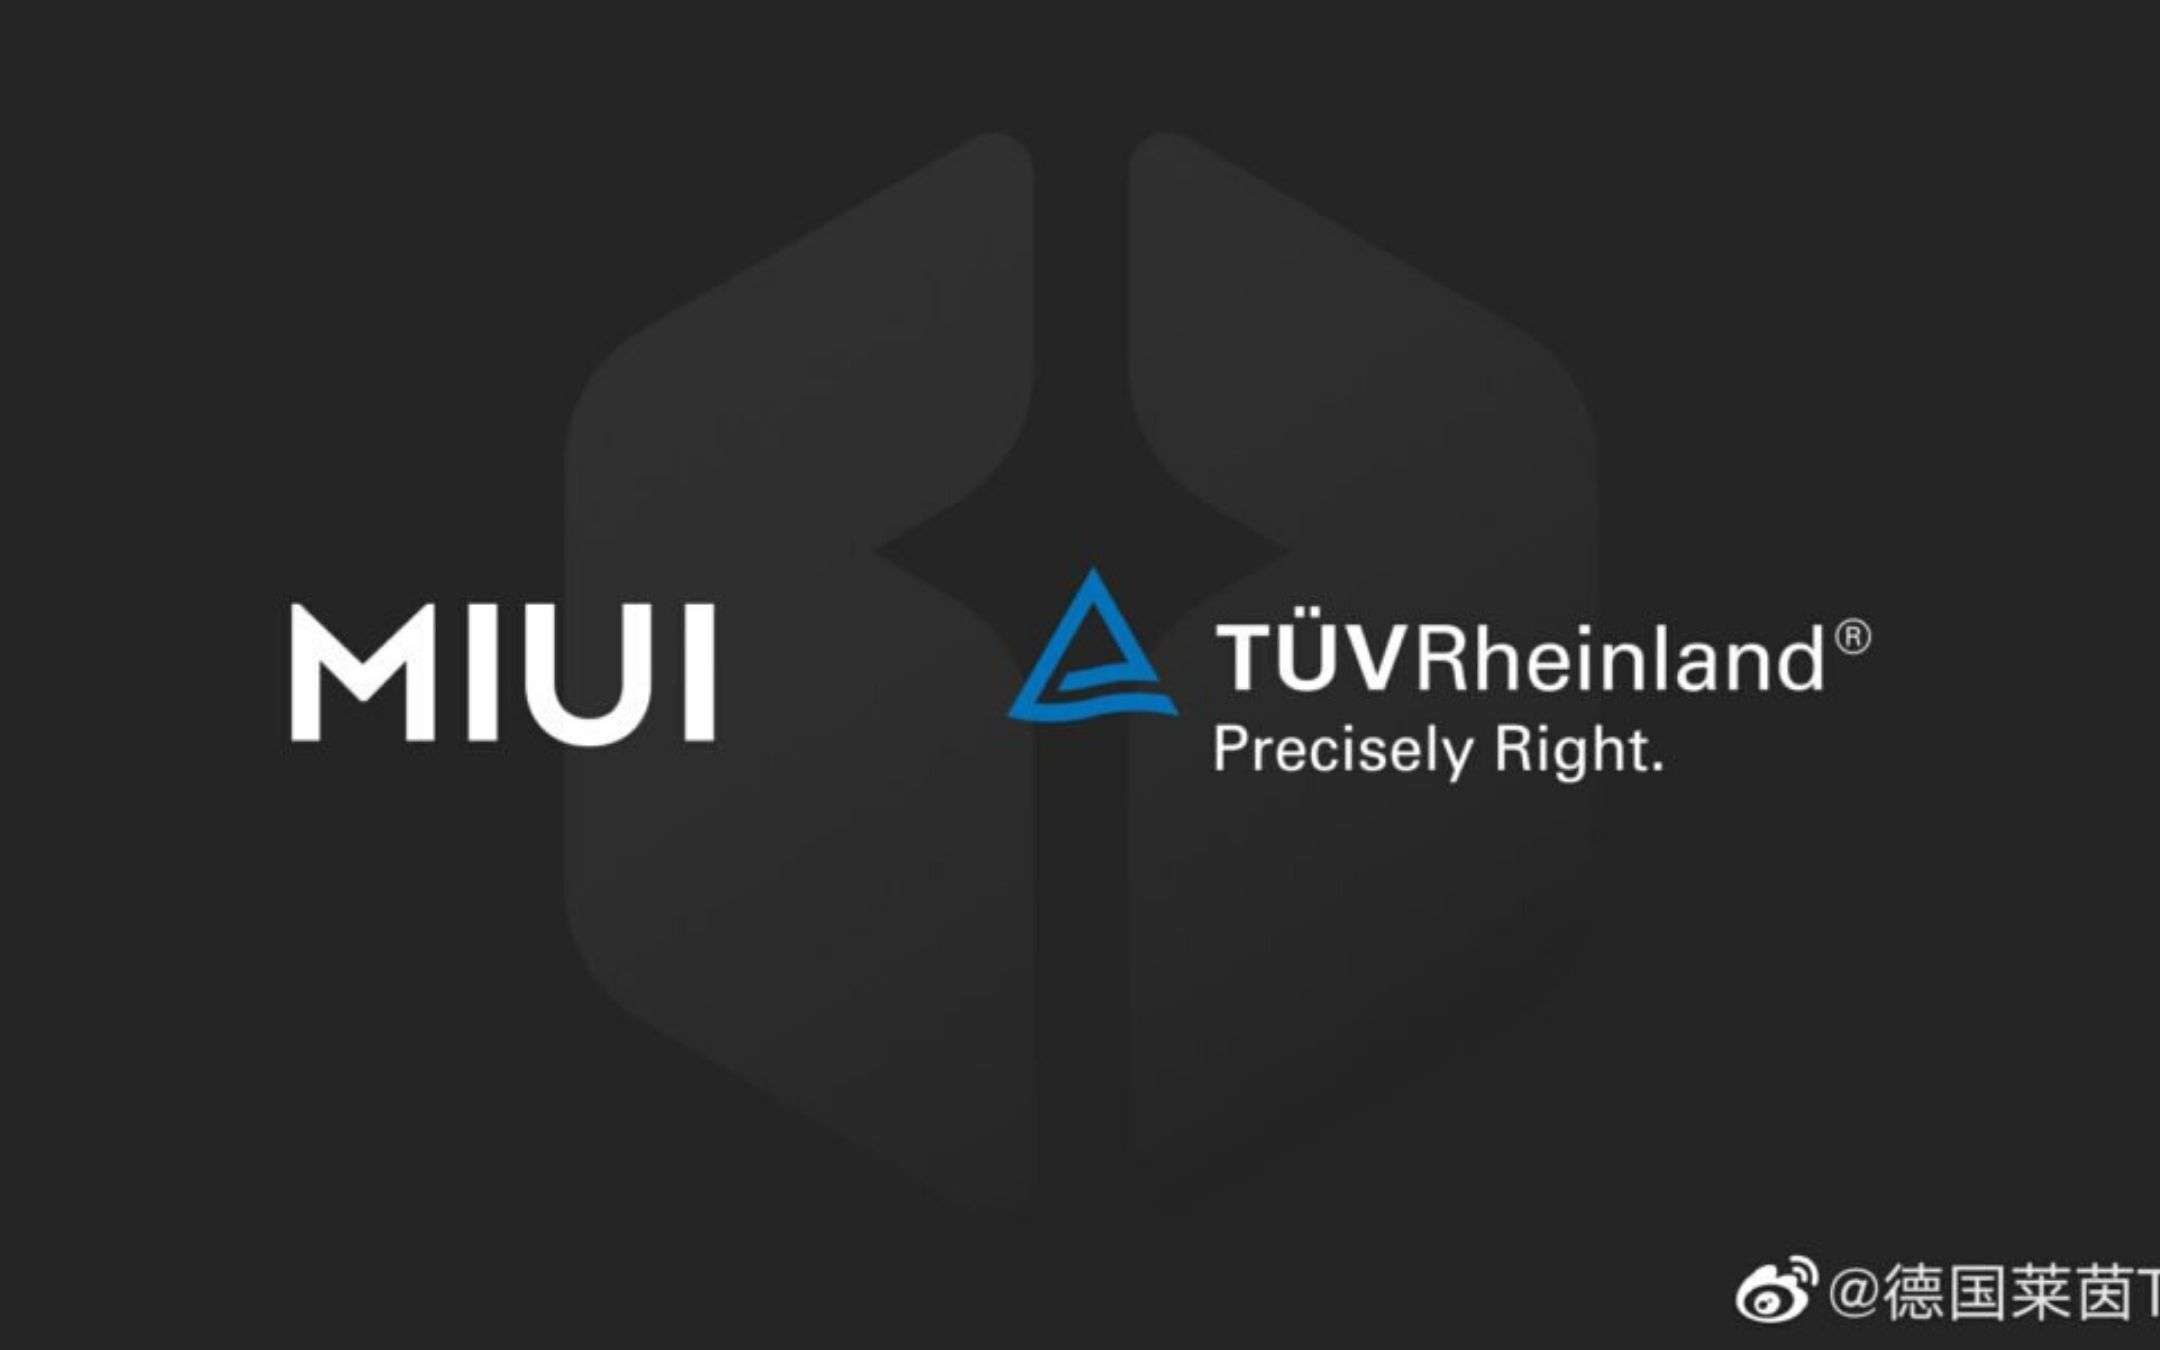 La MIUI riceve la certificazione TÜV Rheinland